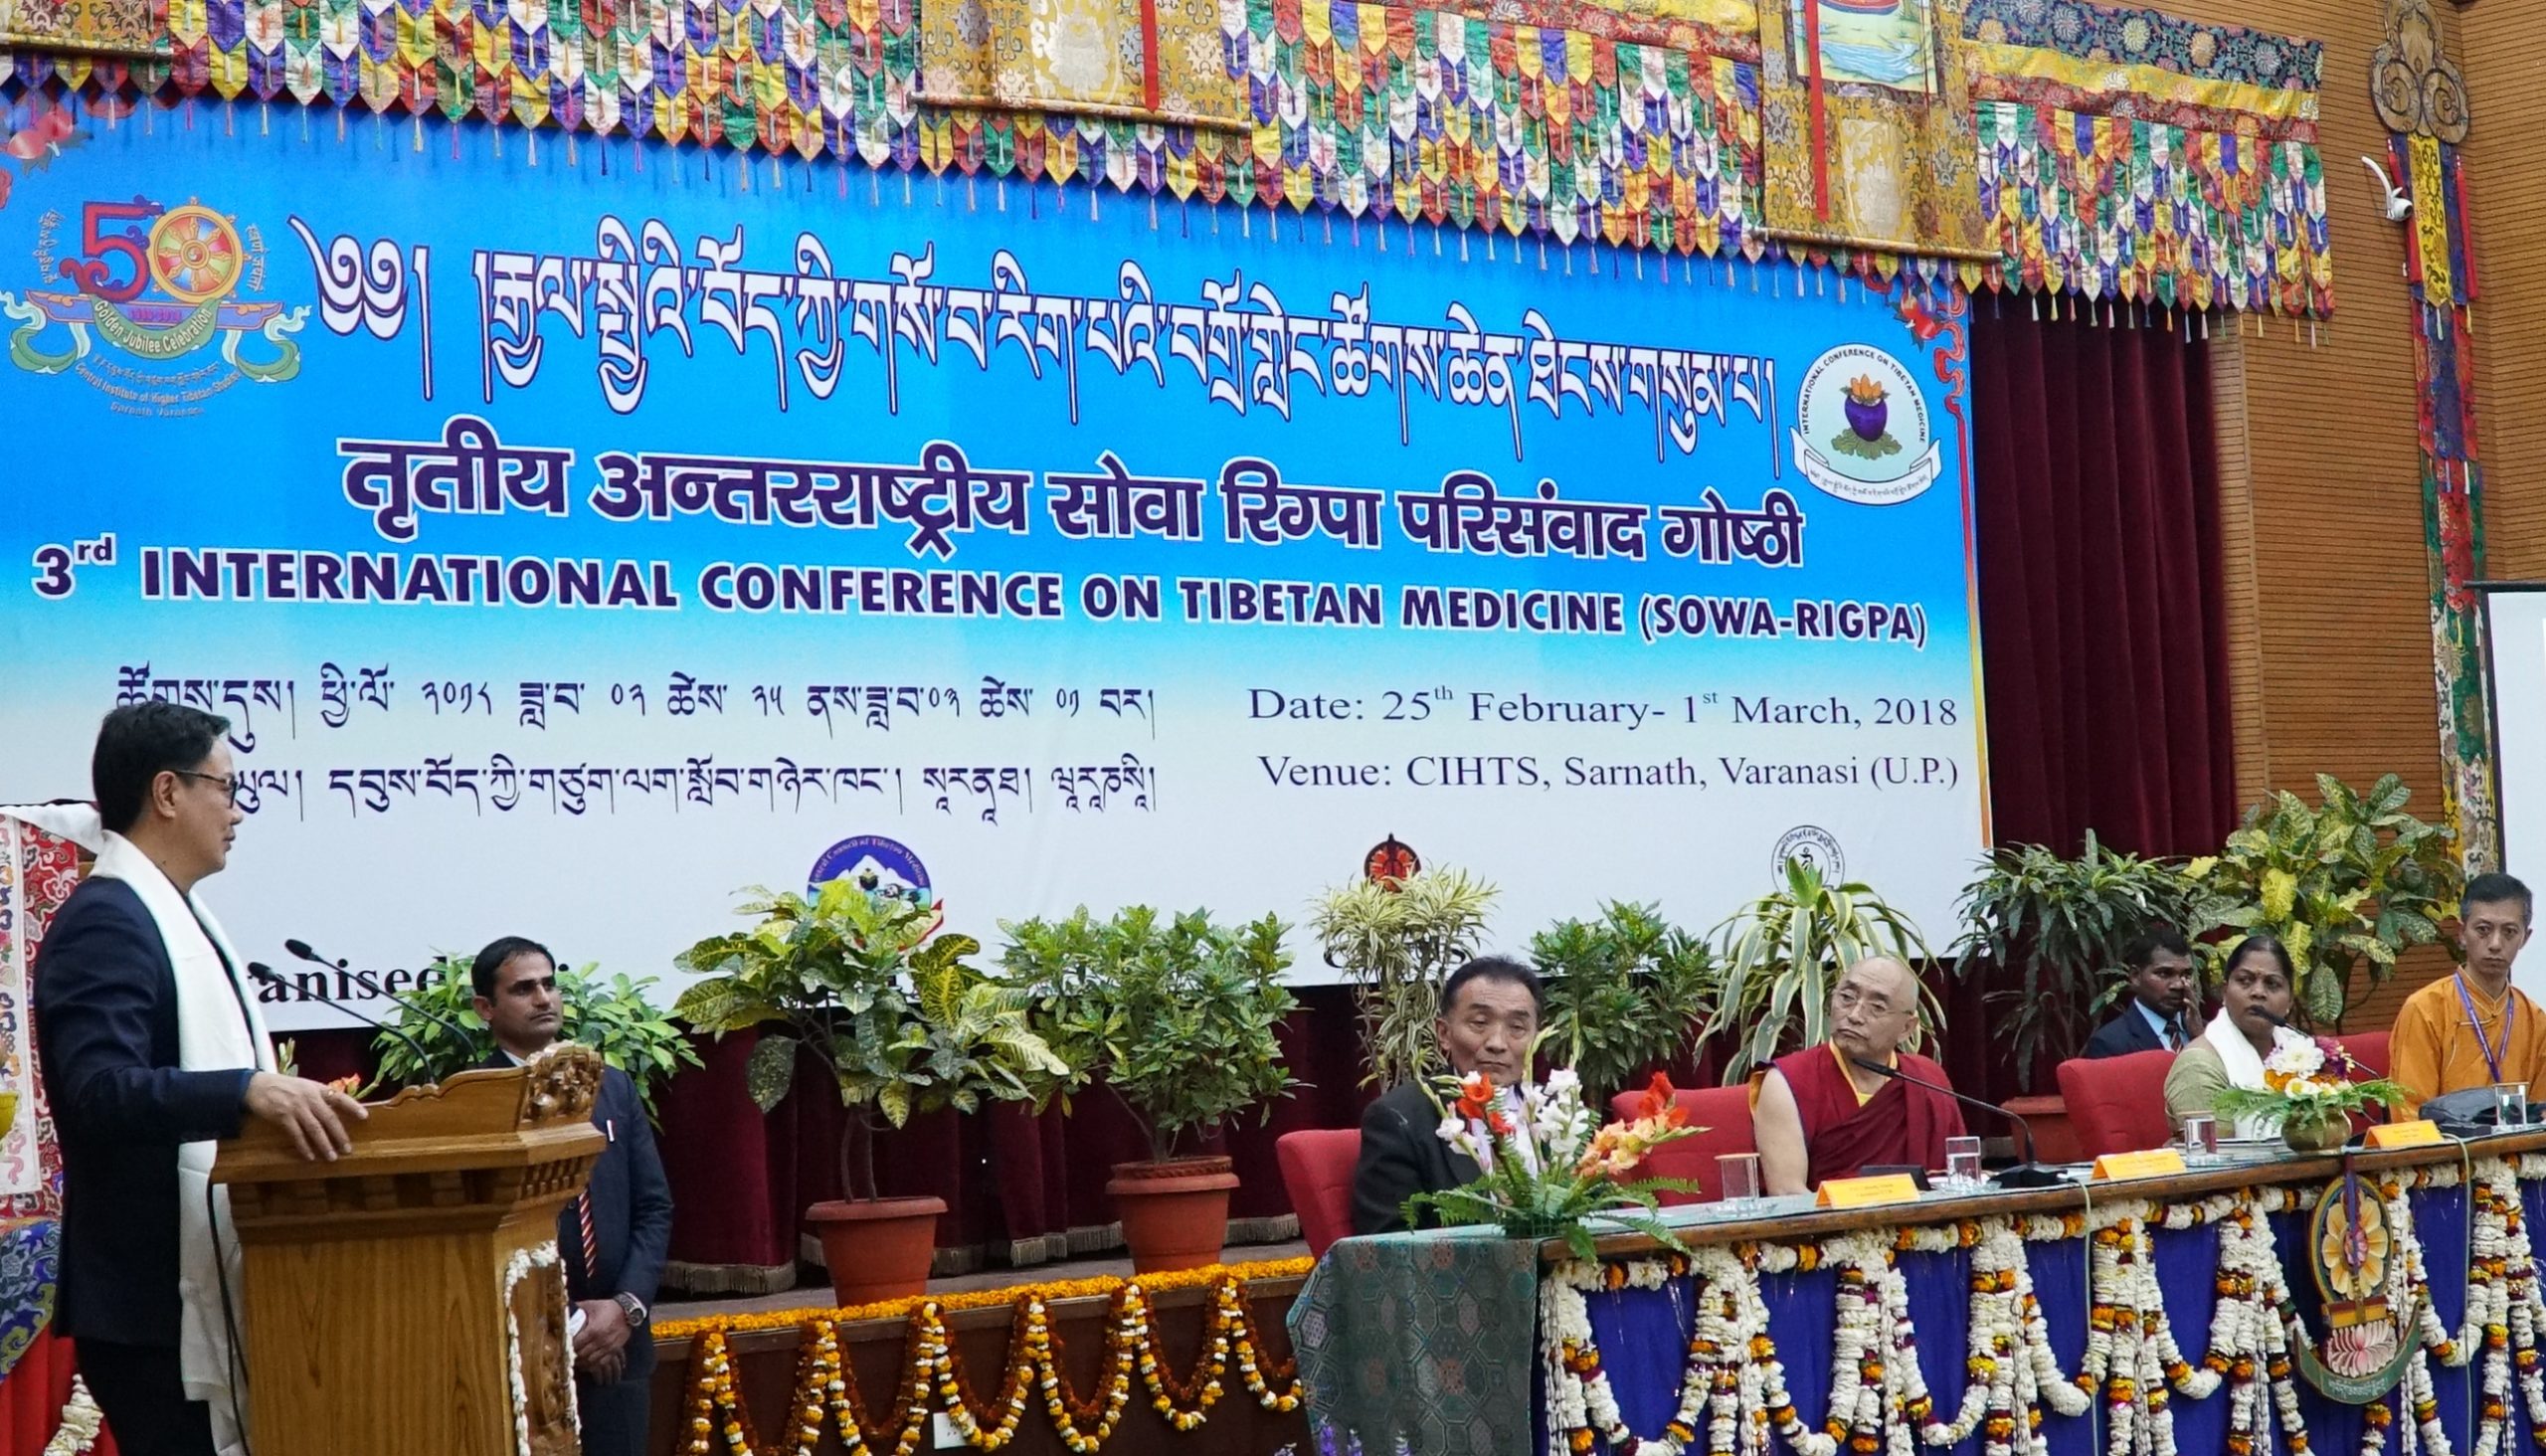 3rd International Conference on Tibetan Medicine